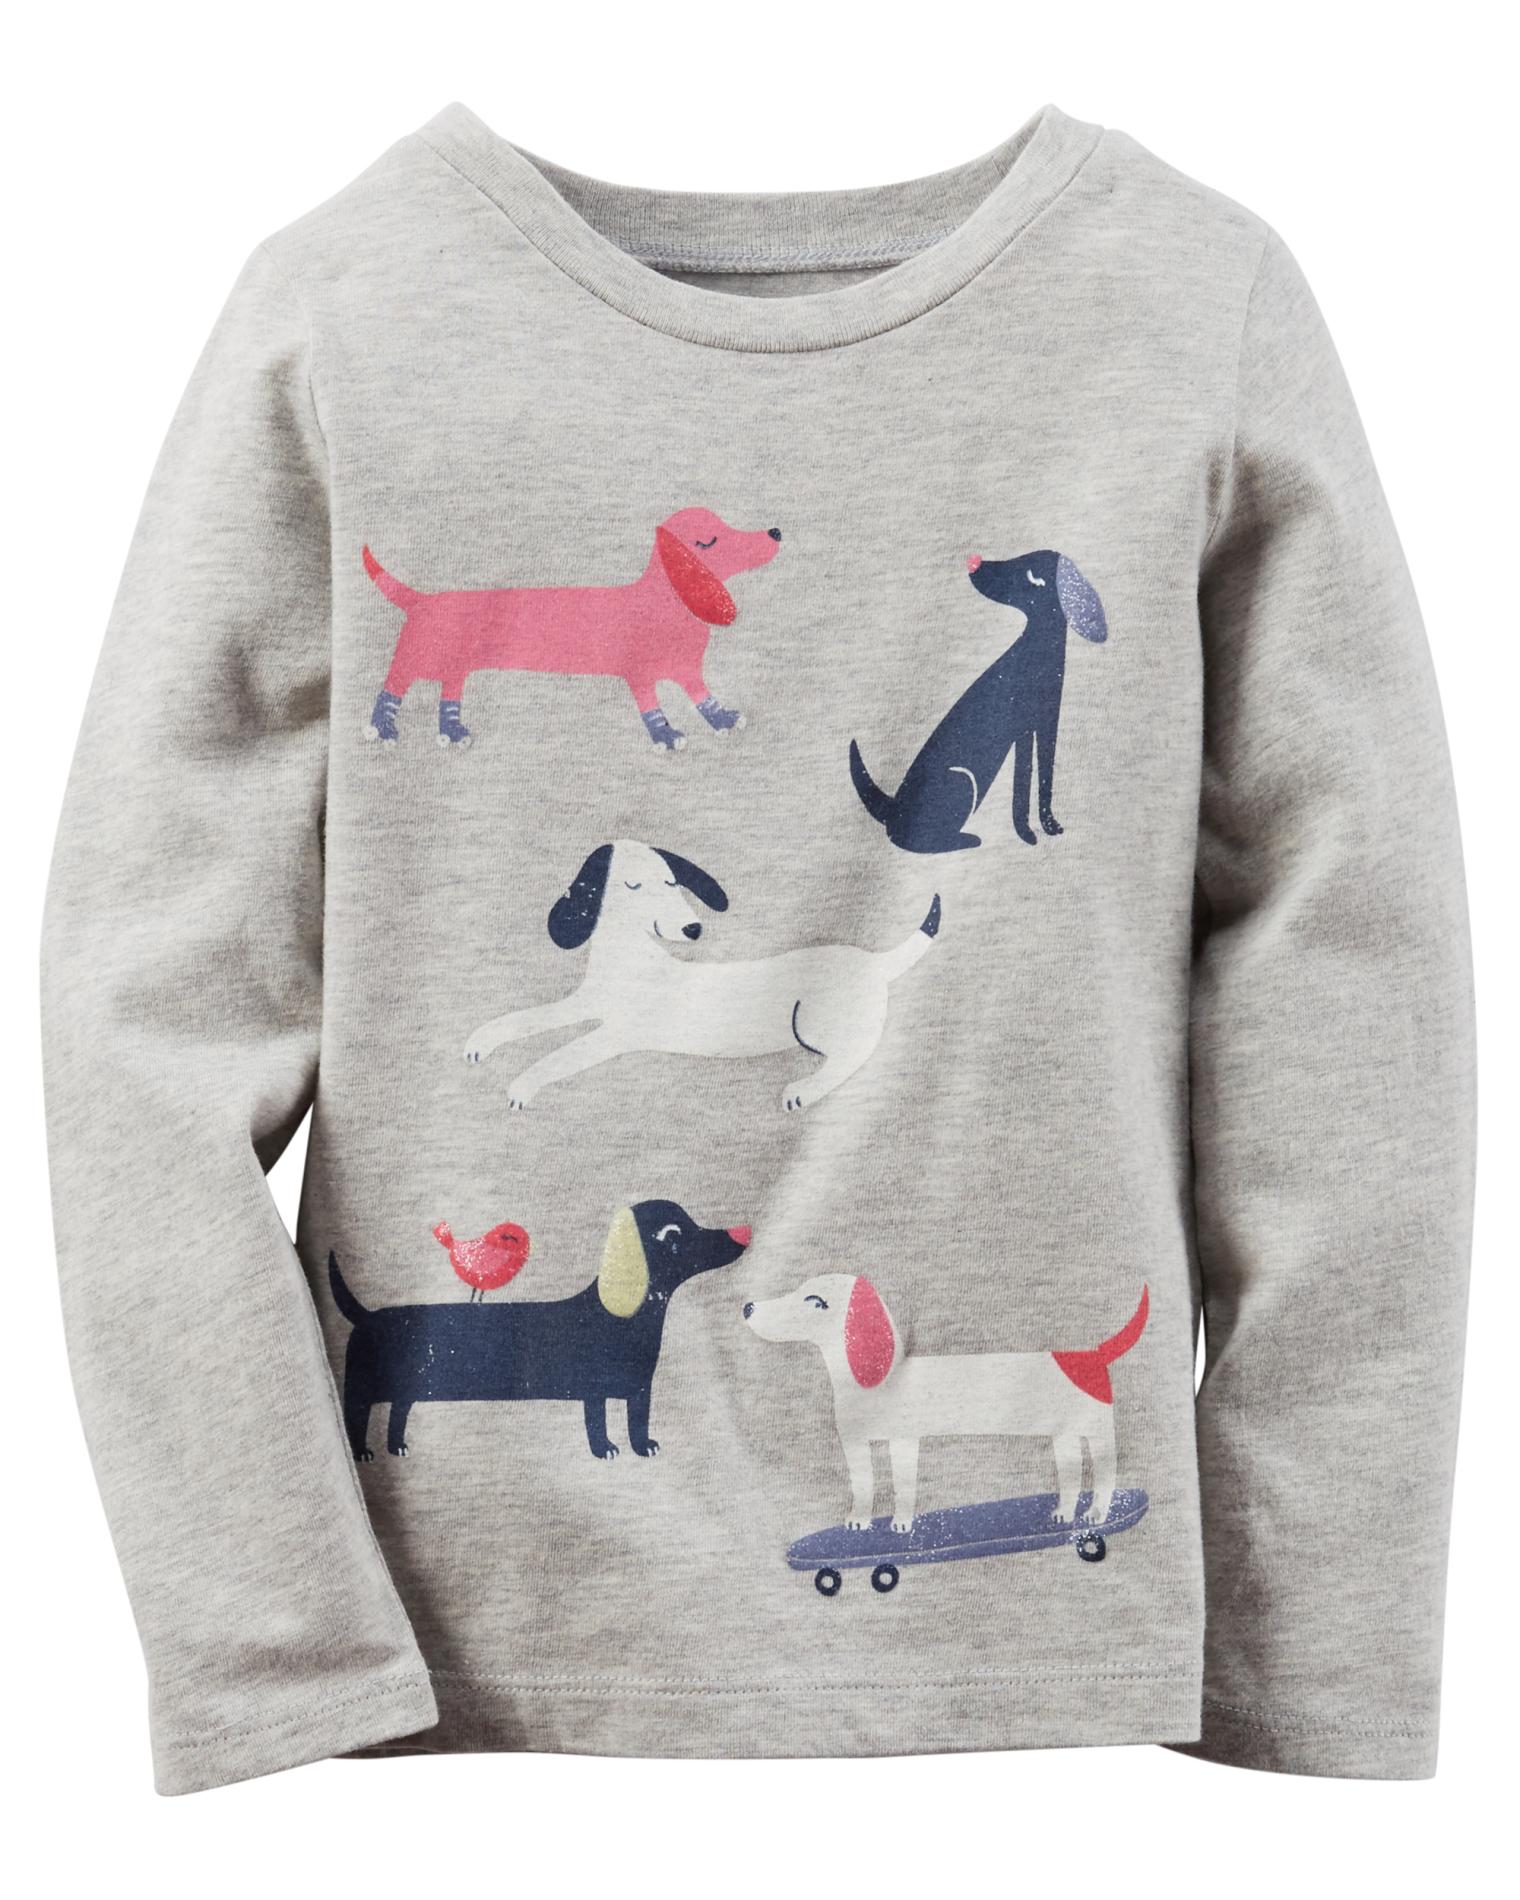 Carter's Girls' Long-Sleeve Graphic T-Shirt - Dogs